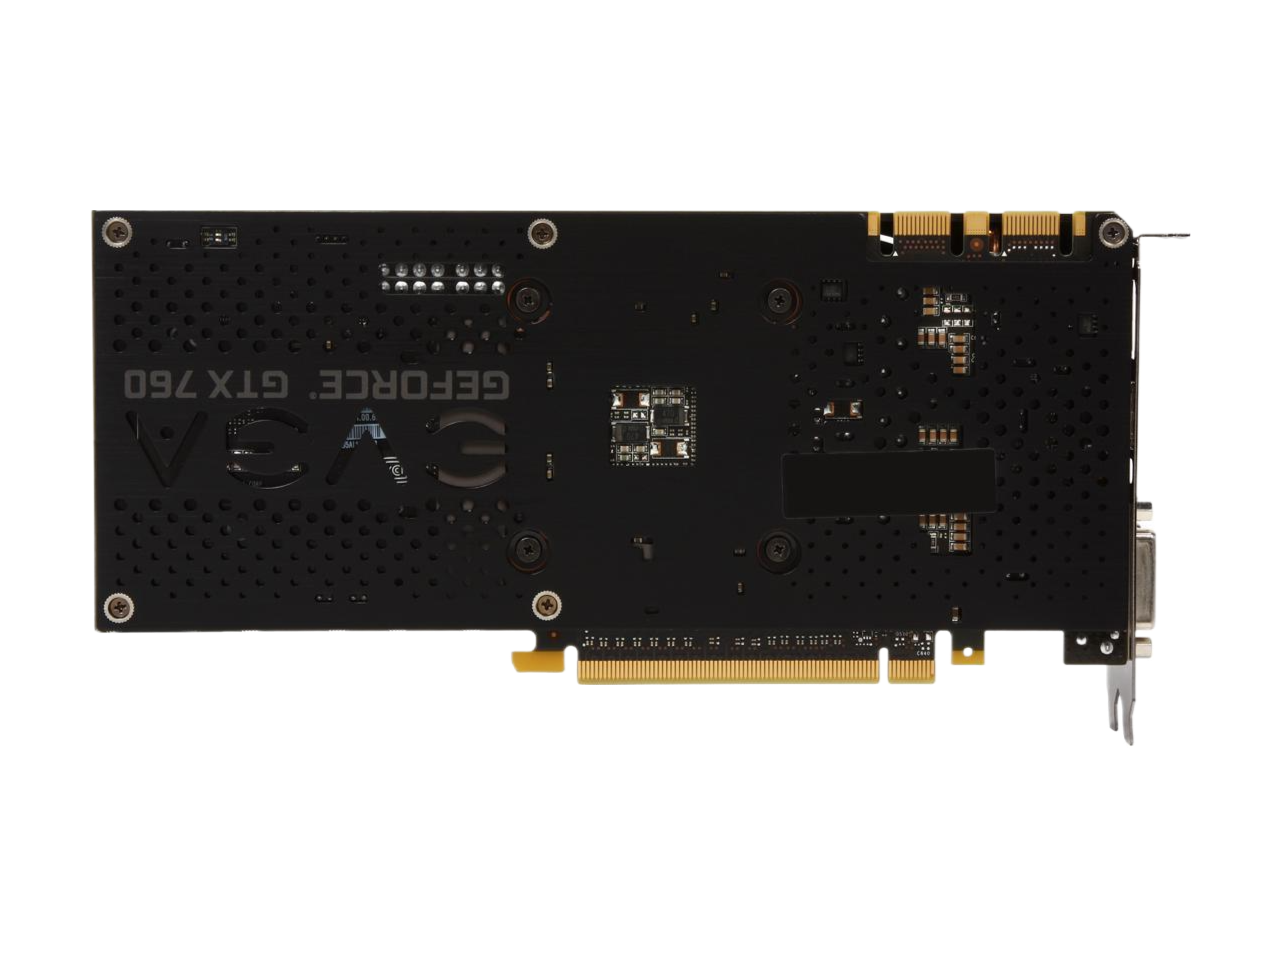 EVGA GeForce GTX 760 2GB 256-bit GDDR5 G-SYNC Support PCI Express 3.0 SLI Support Dual Superclocked w/ EVGA ACX Cooler Video Graphics Card 02G-P4-3765-KR